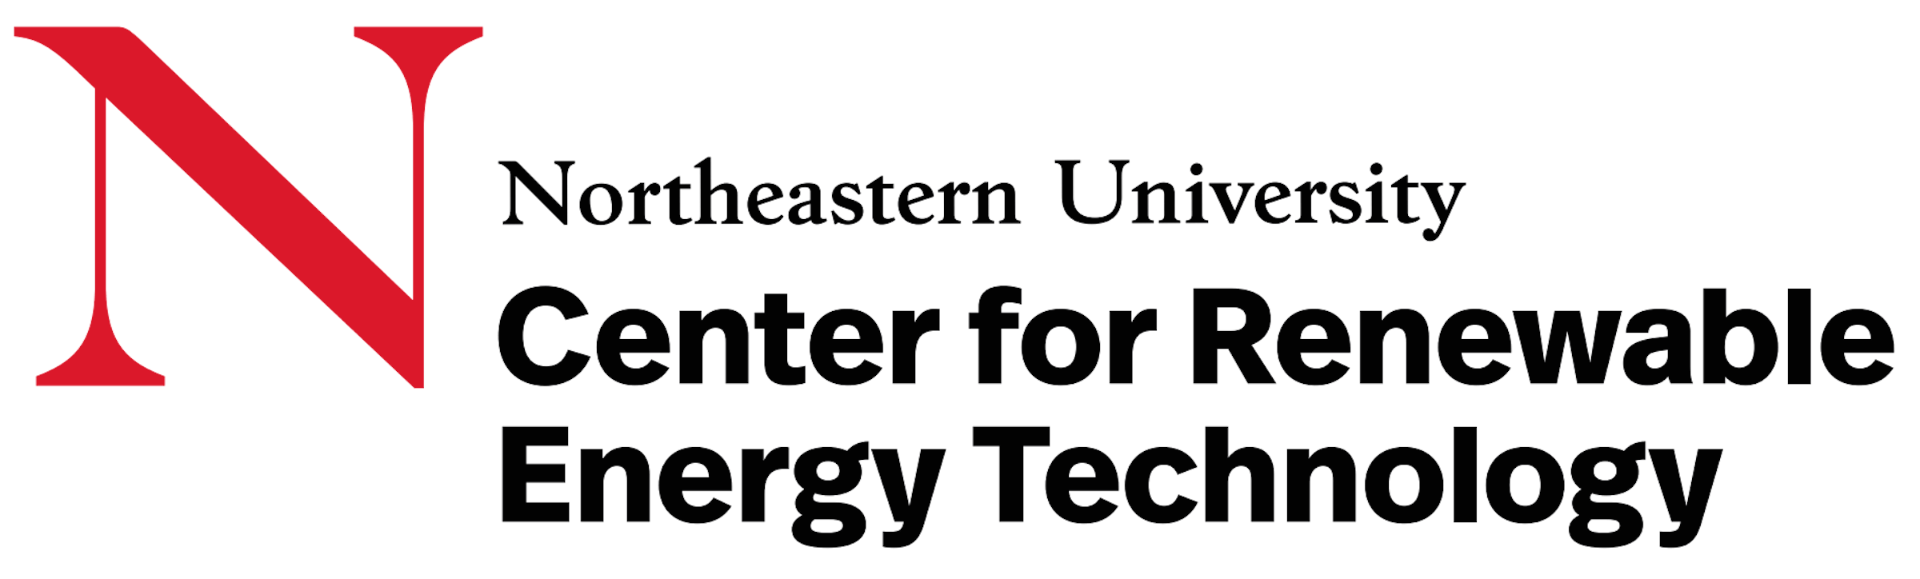 Northeastern University Center for Renewable Energy Technology